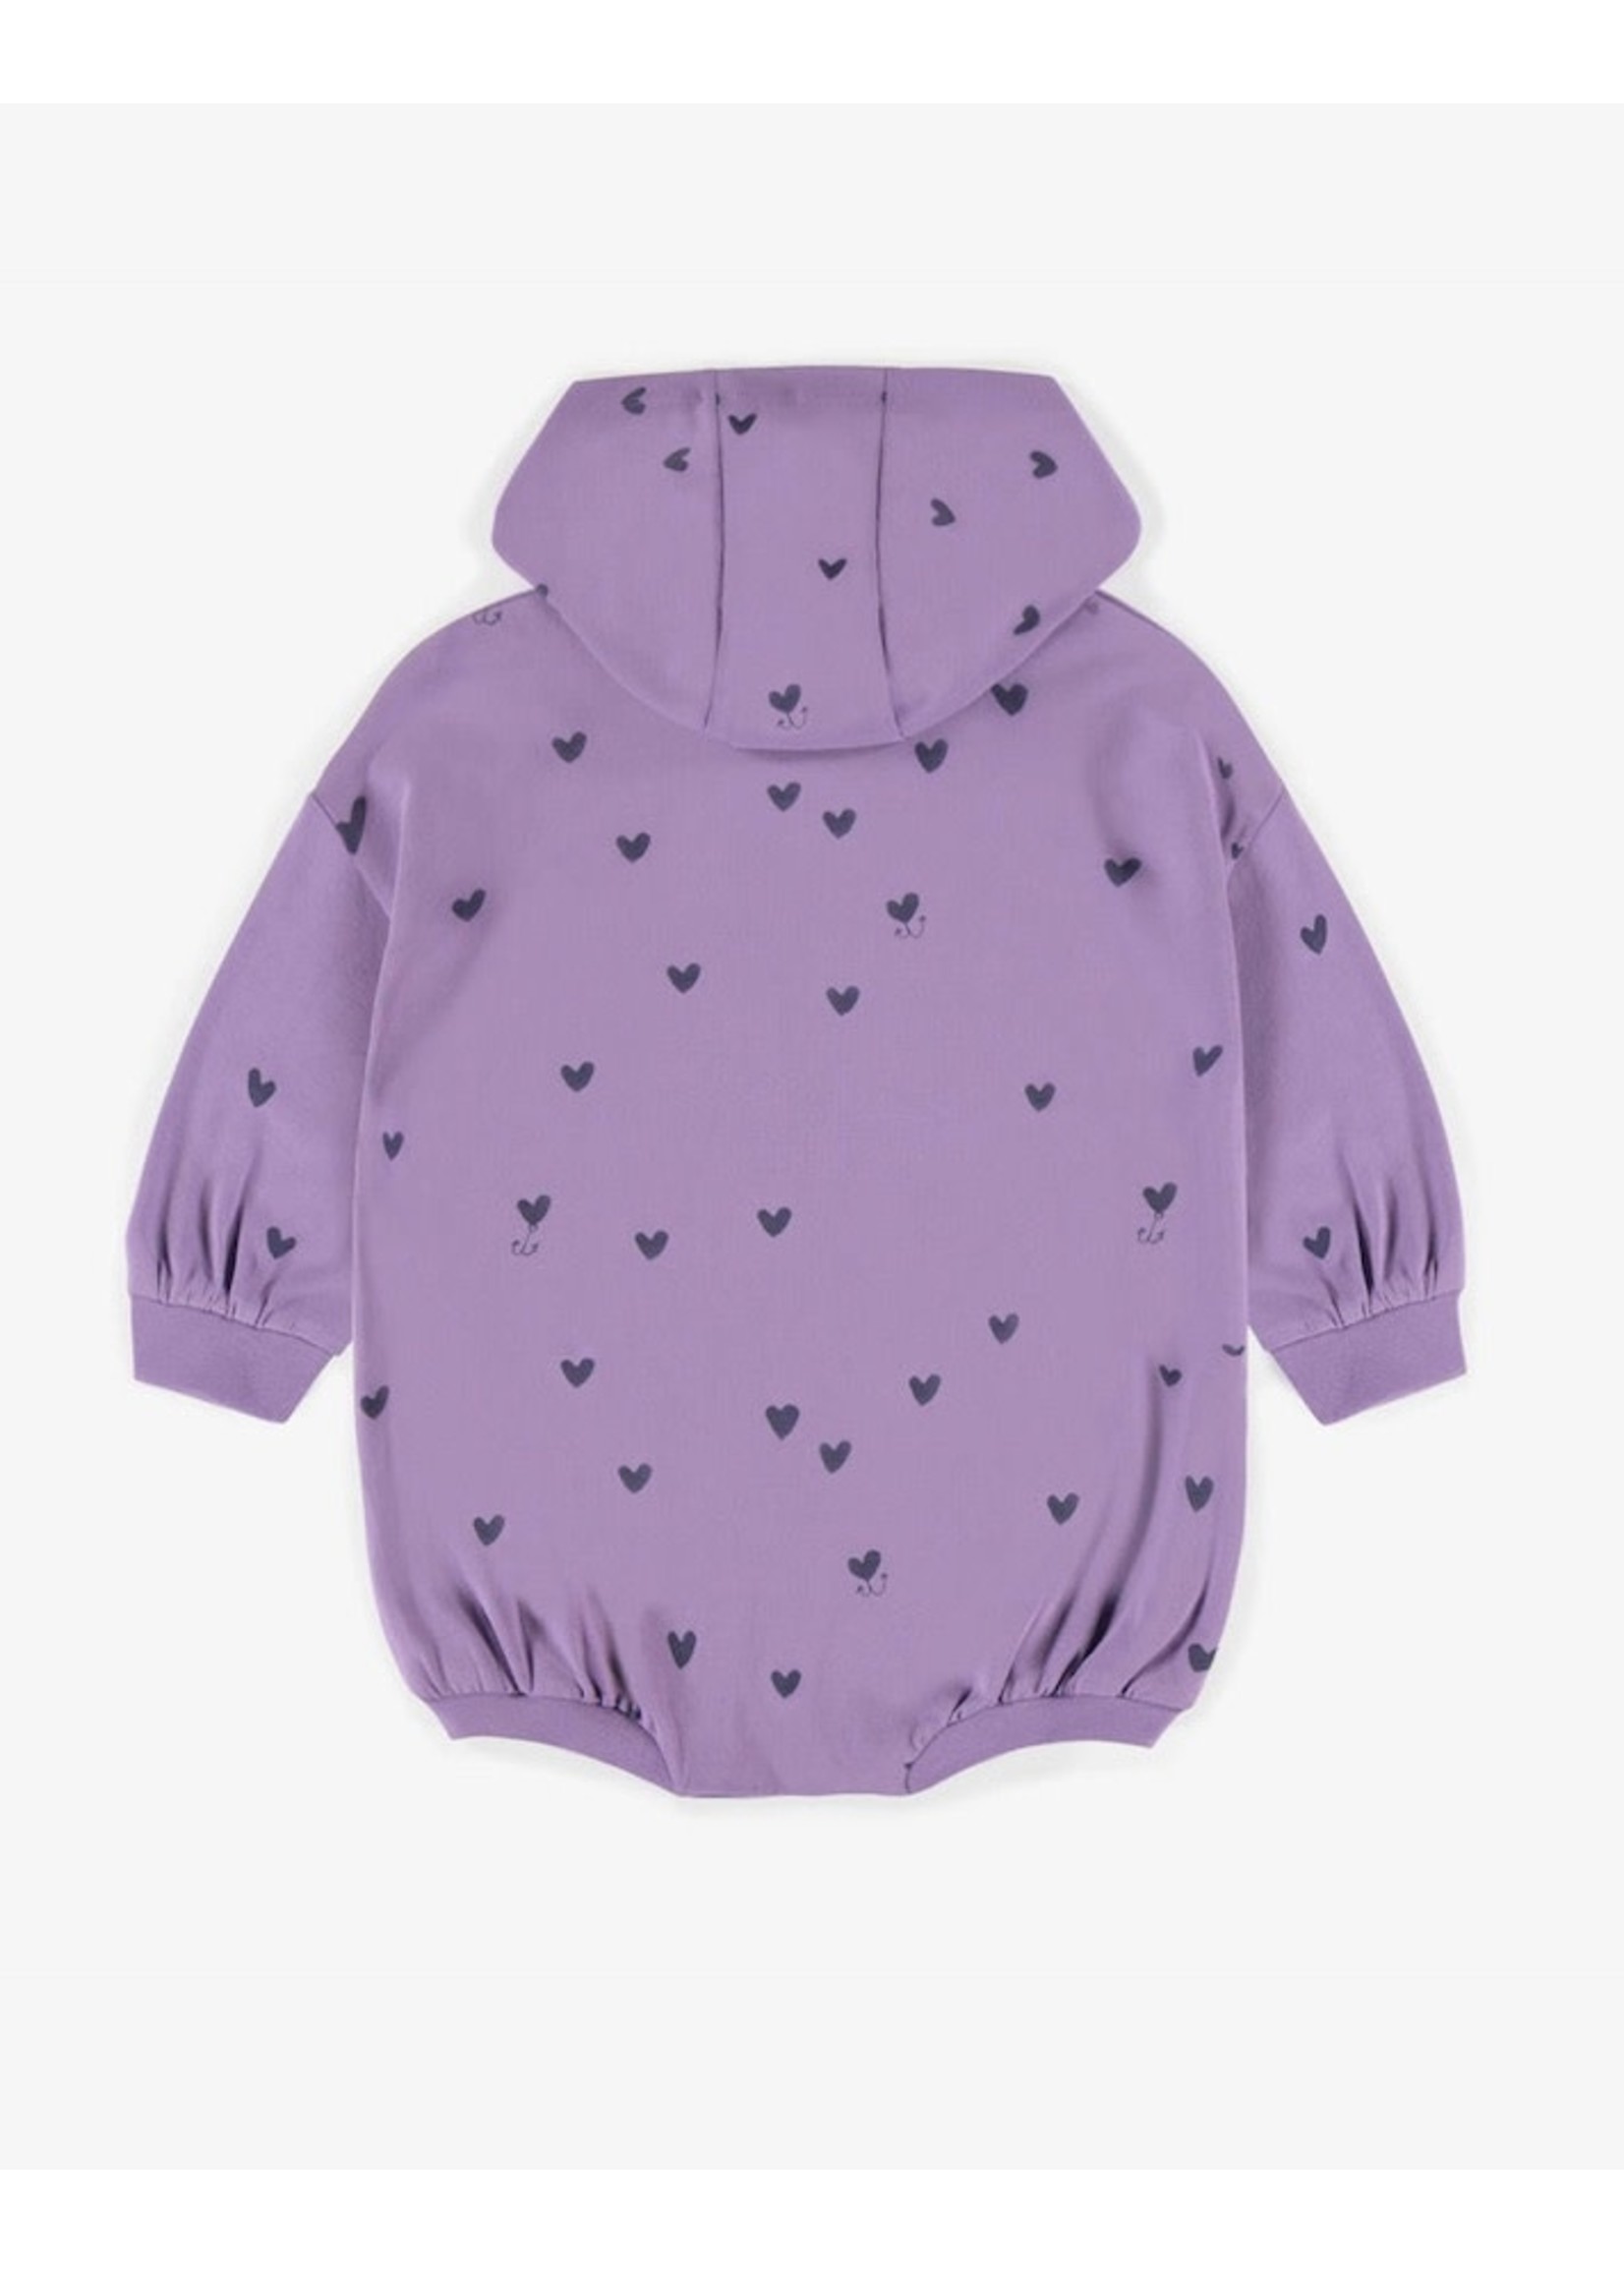 Souris Mini Souris Mini, Purple Heart Printed Long Sleeve One-Piece Hooded Bubble Romper